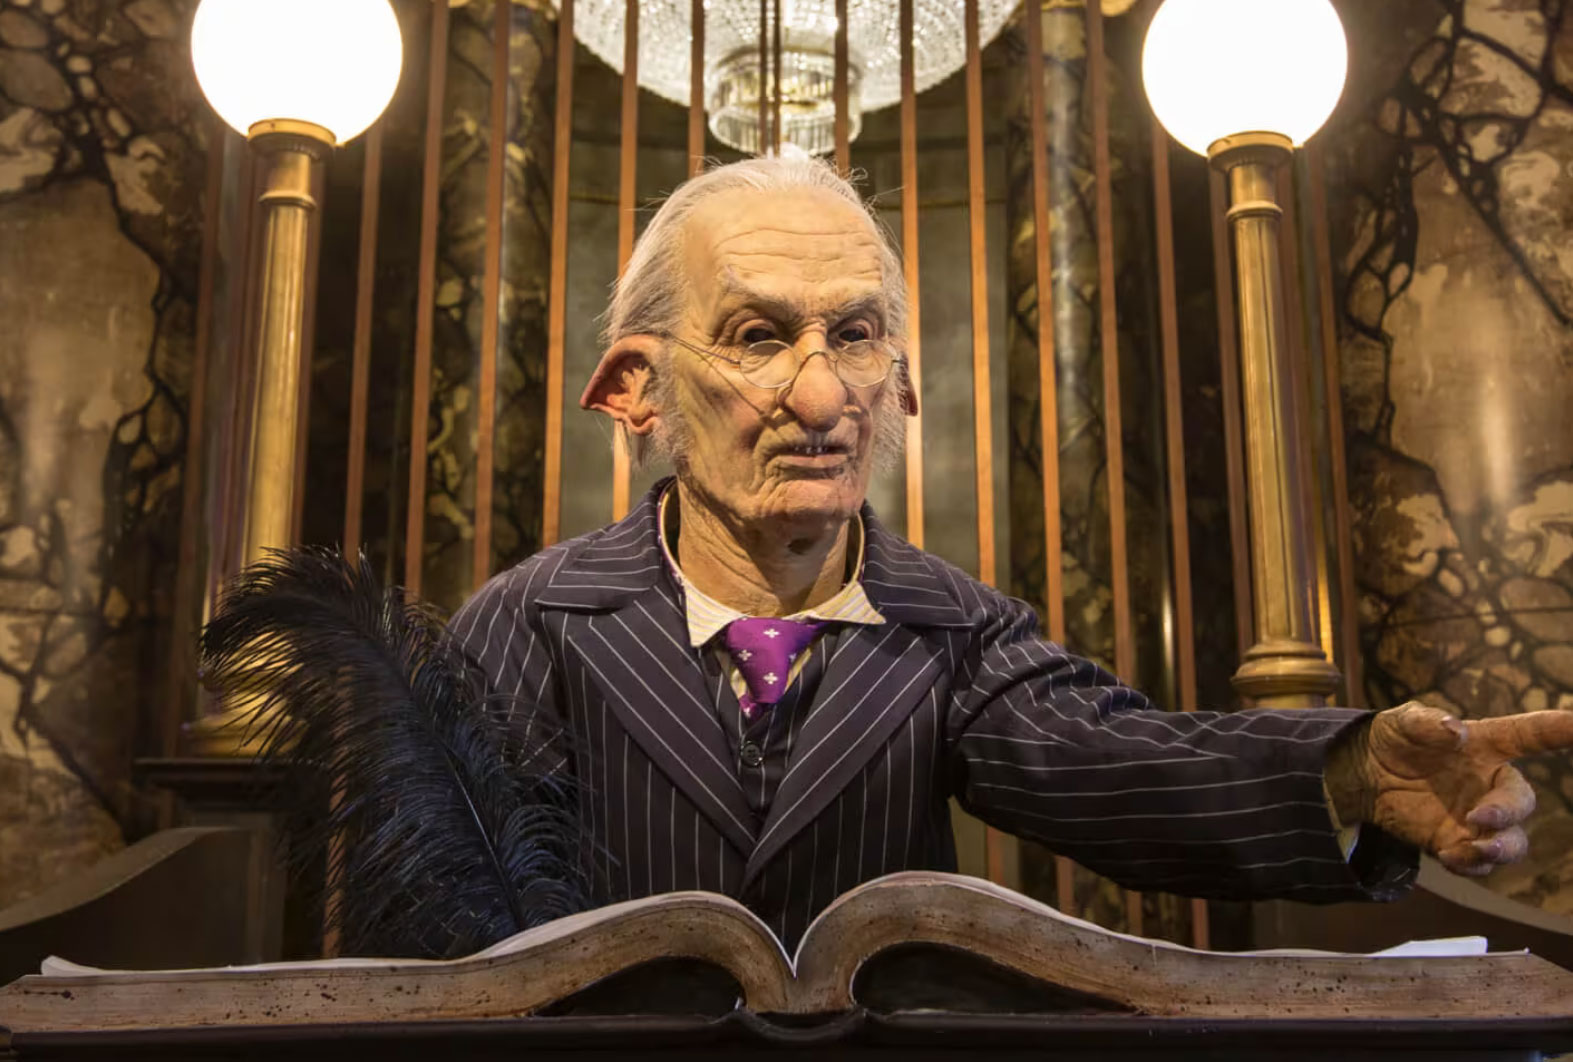 Goblin Manager at Gringott's Bank, Wizarding World of Harry Potter